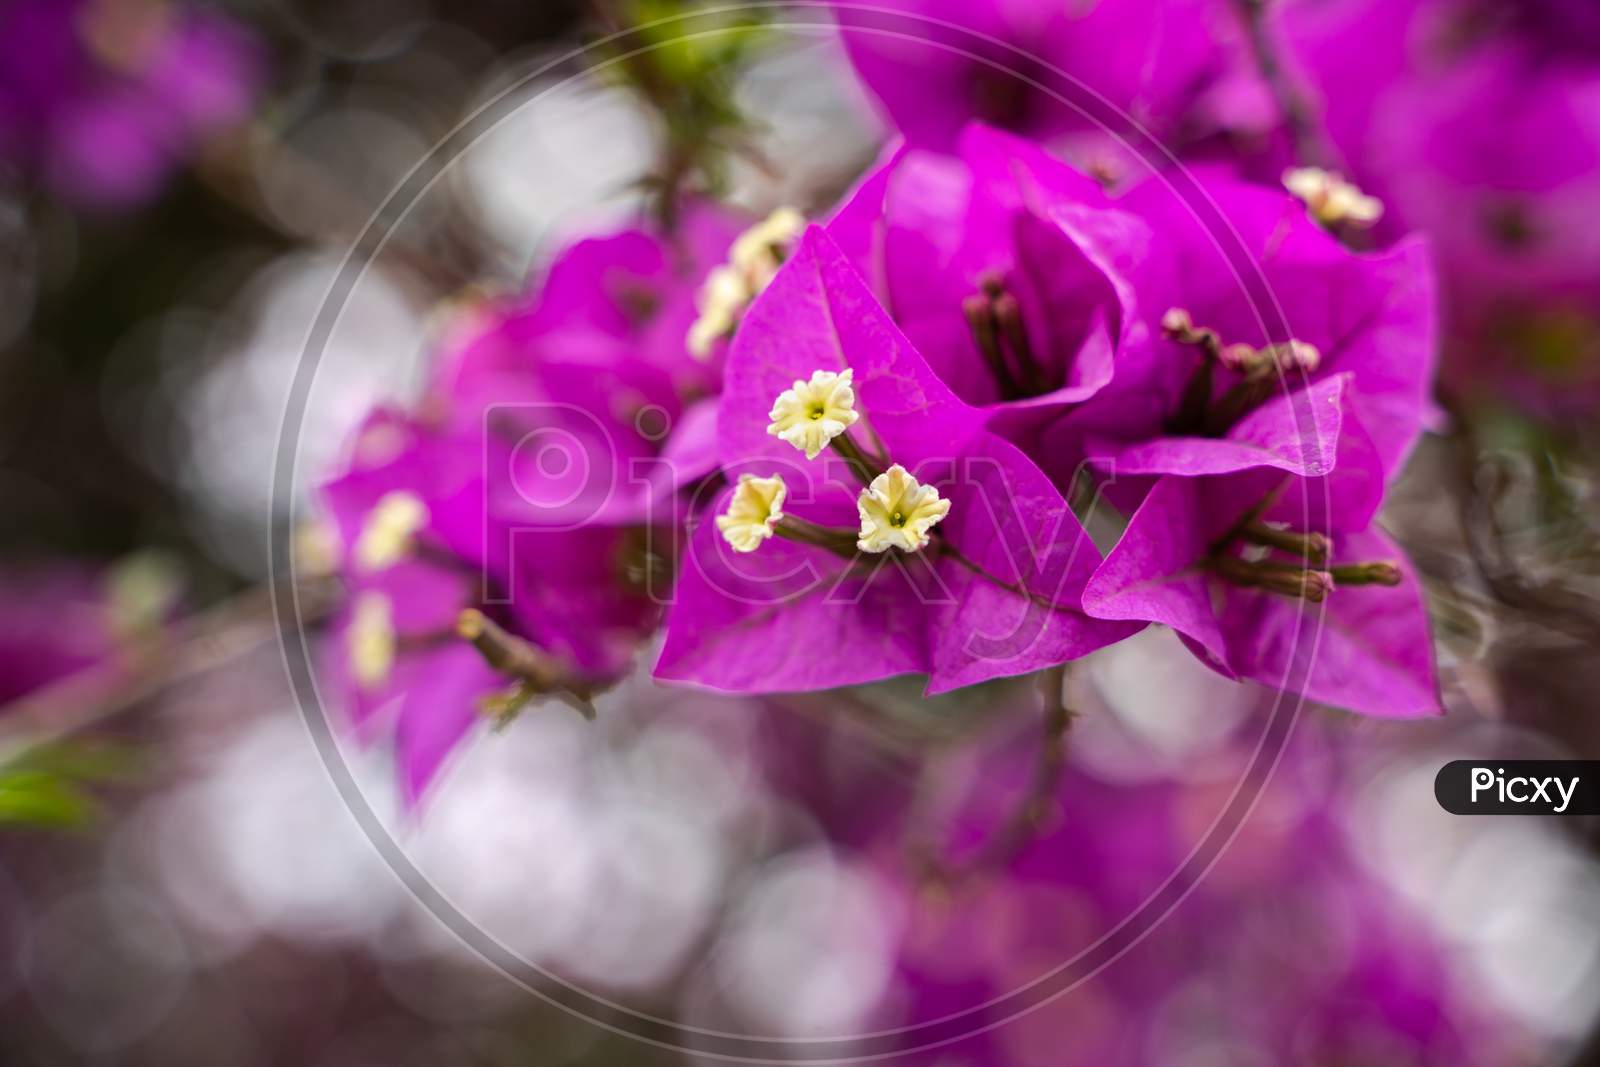 Purple Flowers Of Bougainvillea Spectabilis On Blur Background ( Bokeh ). Close Up Shot Of Purple Flower Bougainvillea.